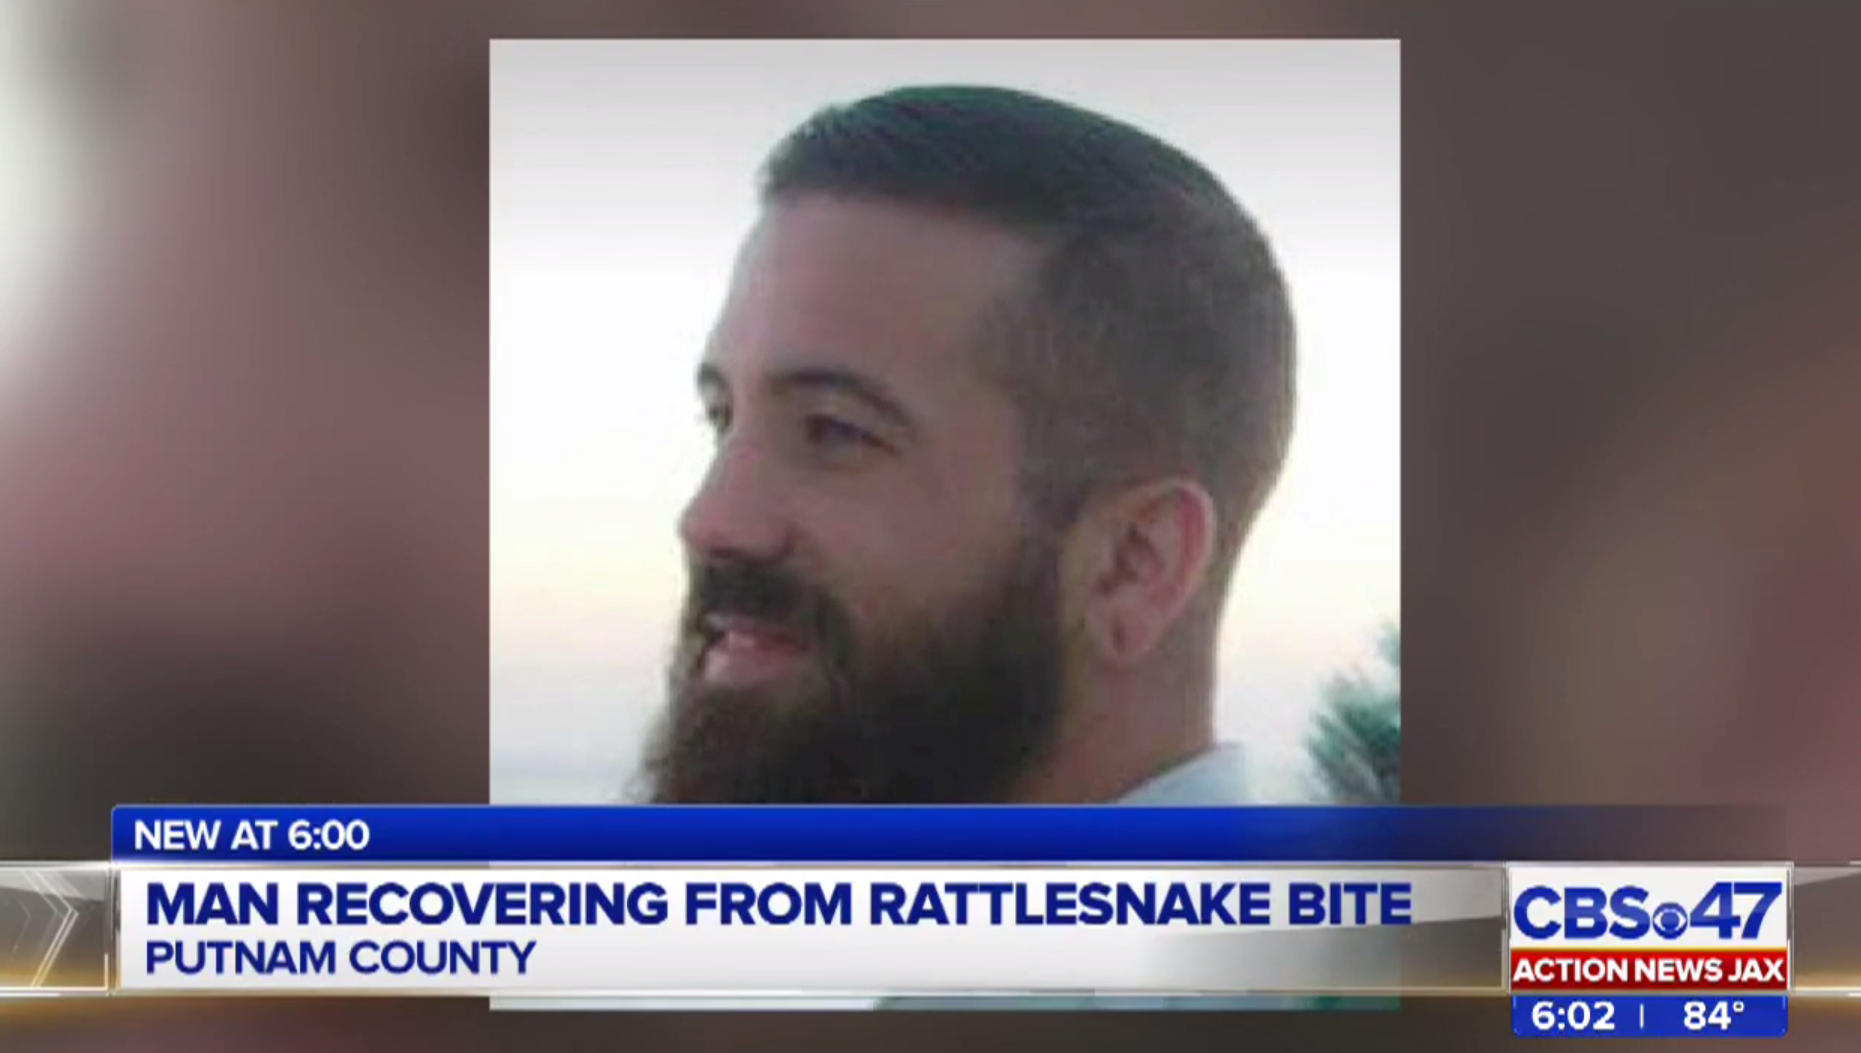 Florida man bitten on the tongue by rattlesnake - CBS News